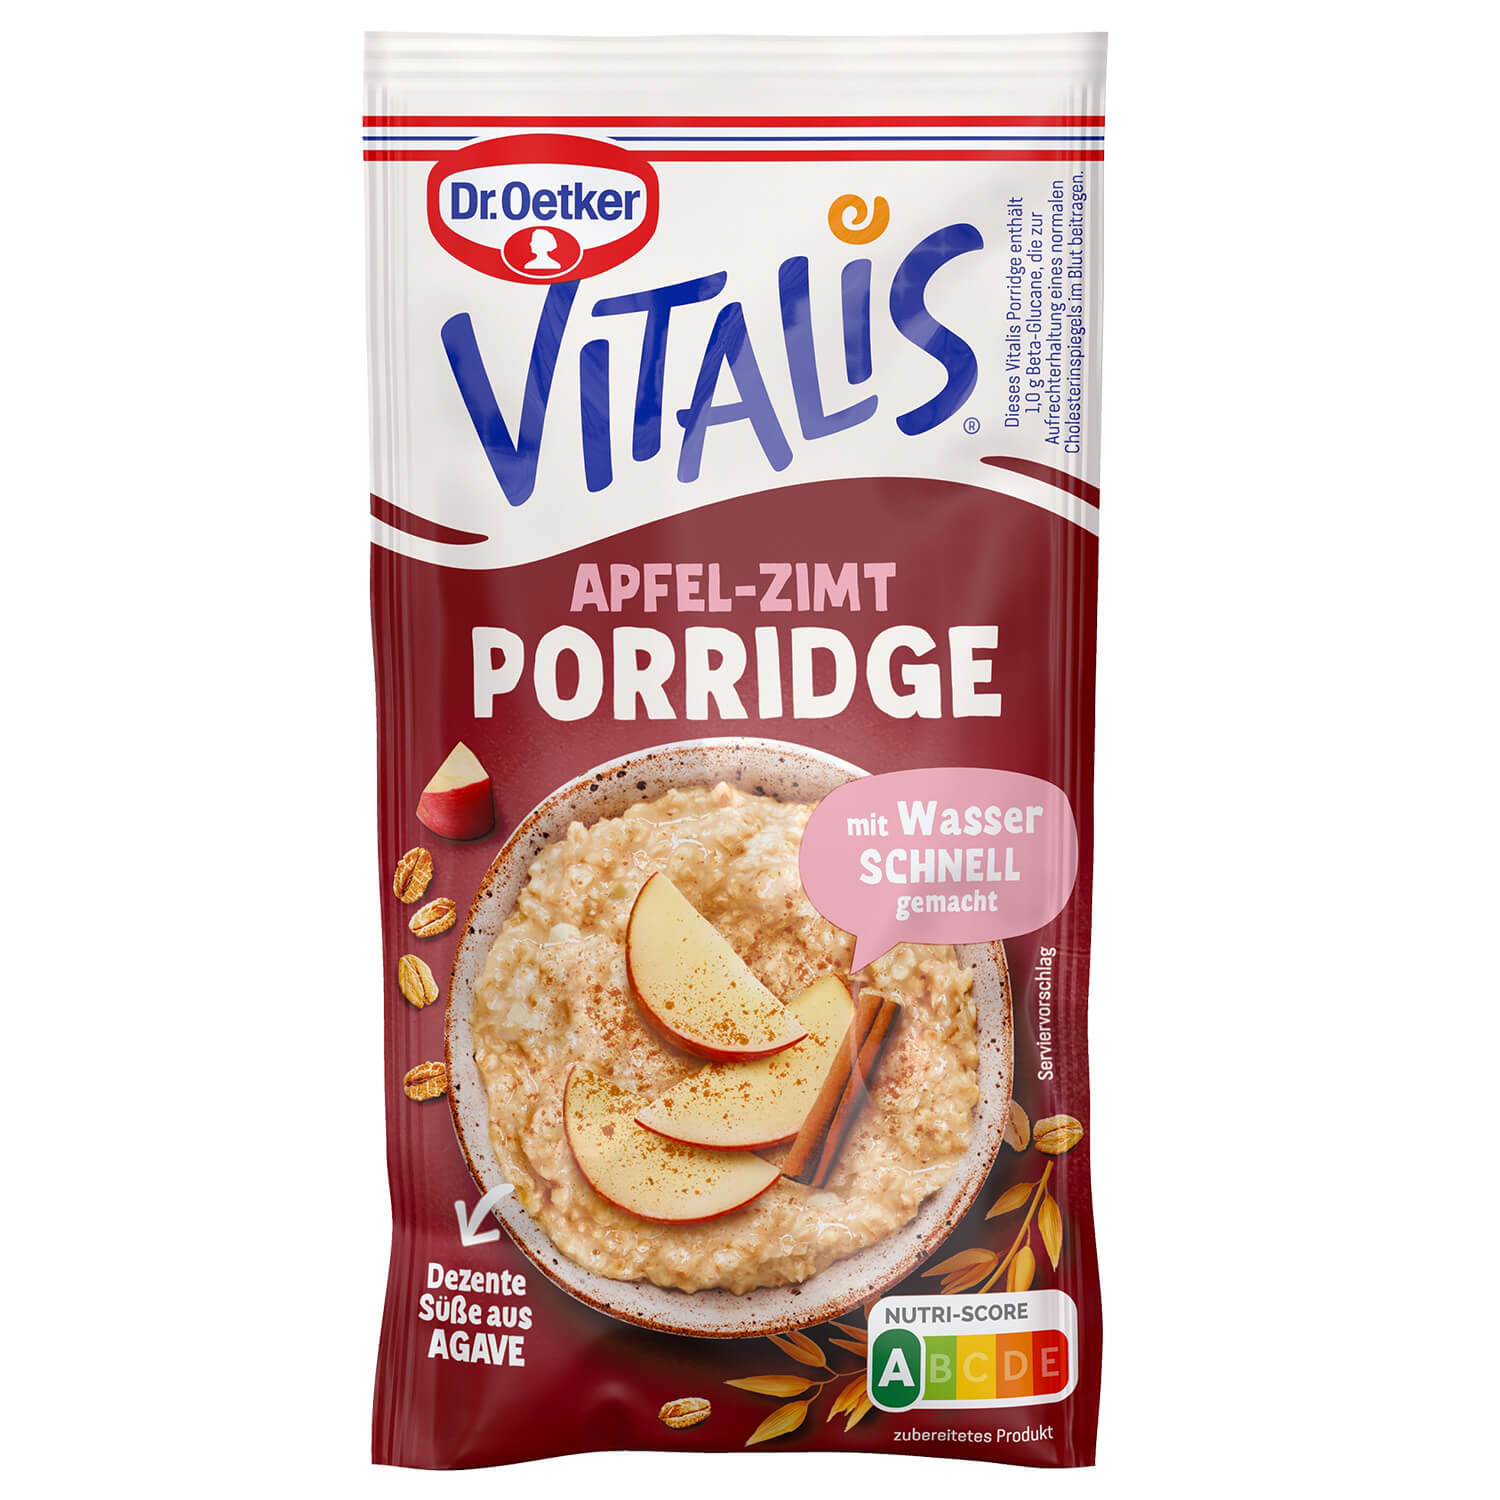 Dr. Oetker Vitalis Porridge Apfel-Zimt 58g Beutel